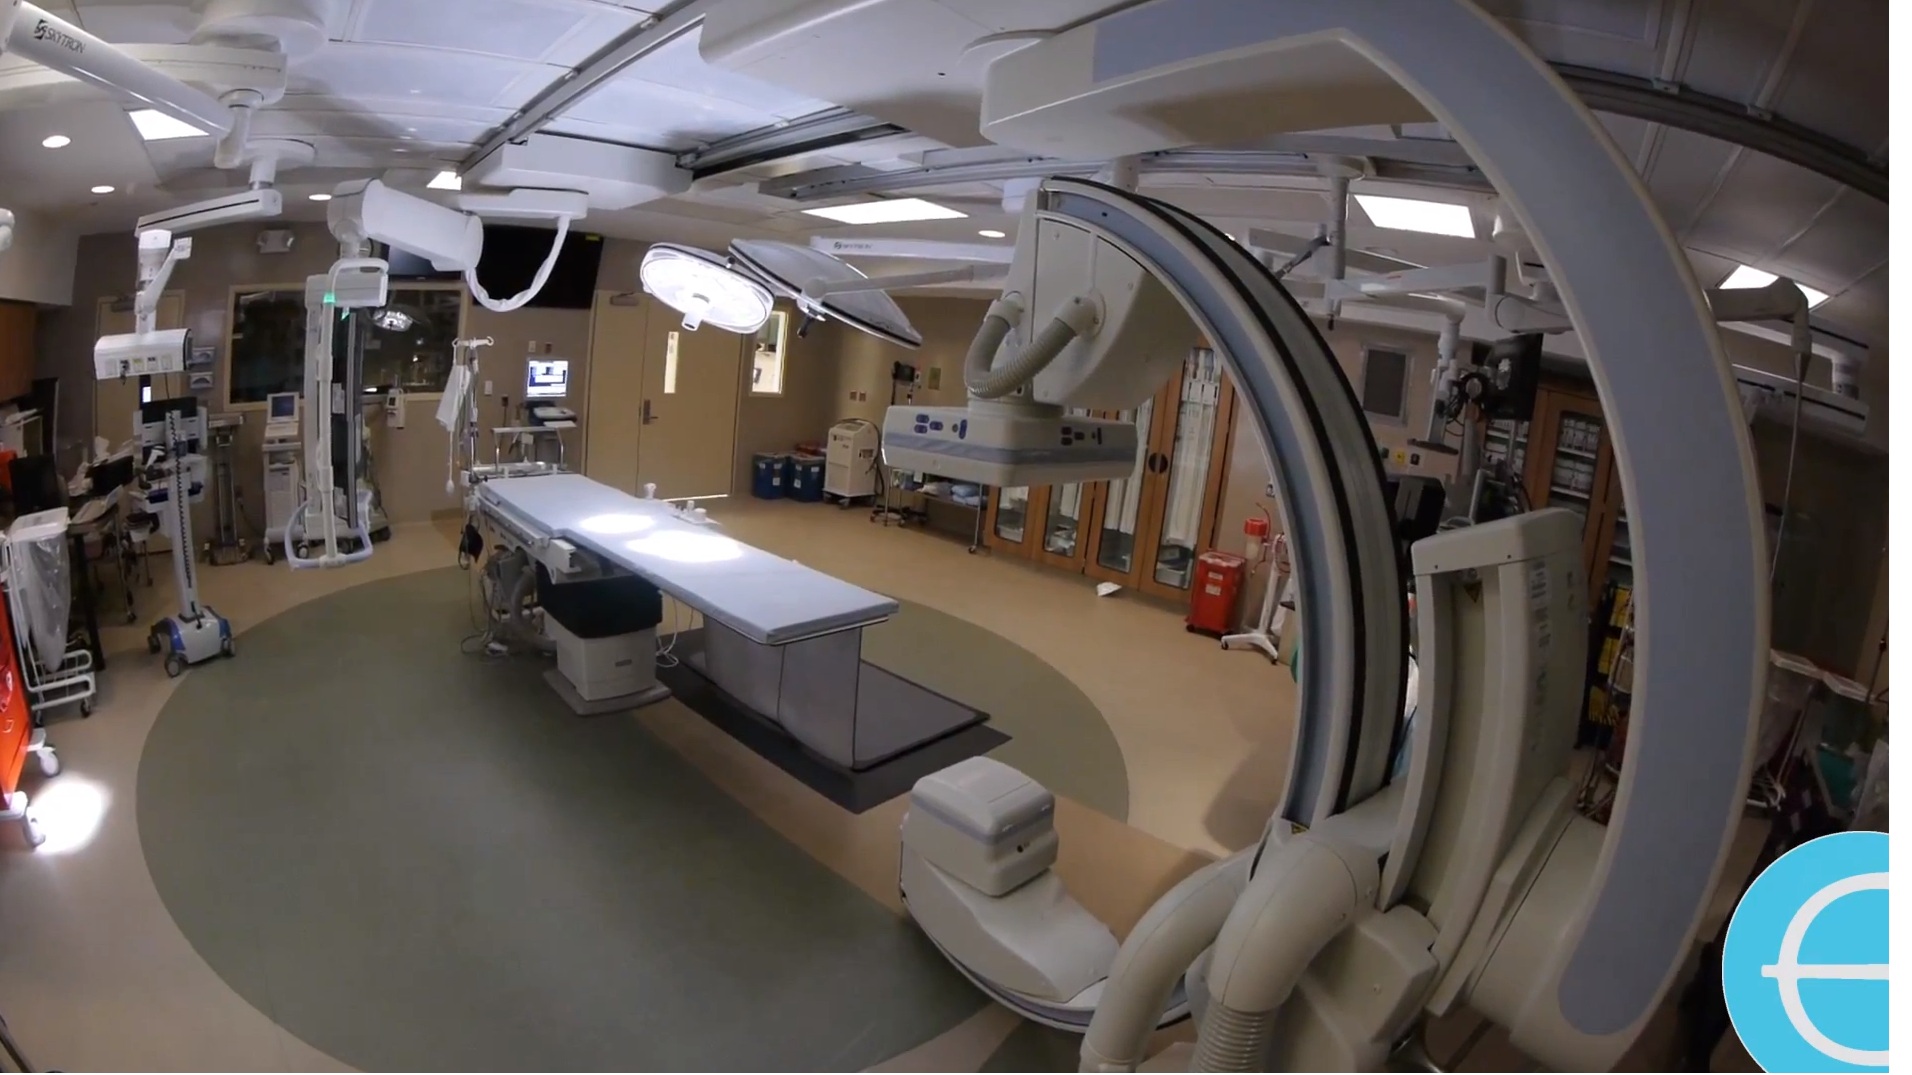 Hybrid-OR-Operating-Room-Siemens-Artis-Zee-Ceiling-Mount-Imaging-System-Skytron-LED-Surgical-Lights-Booms-Englewood Hospital-NJ-2.jpg